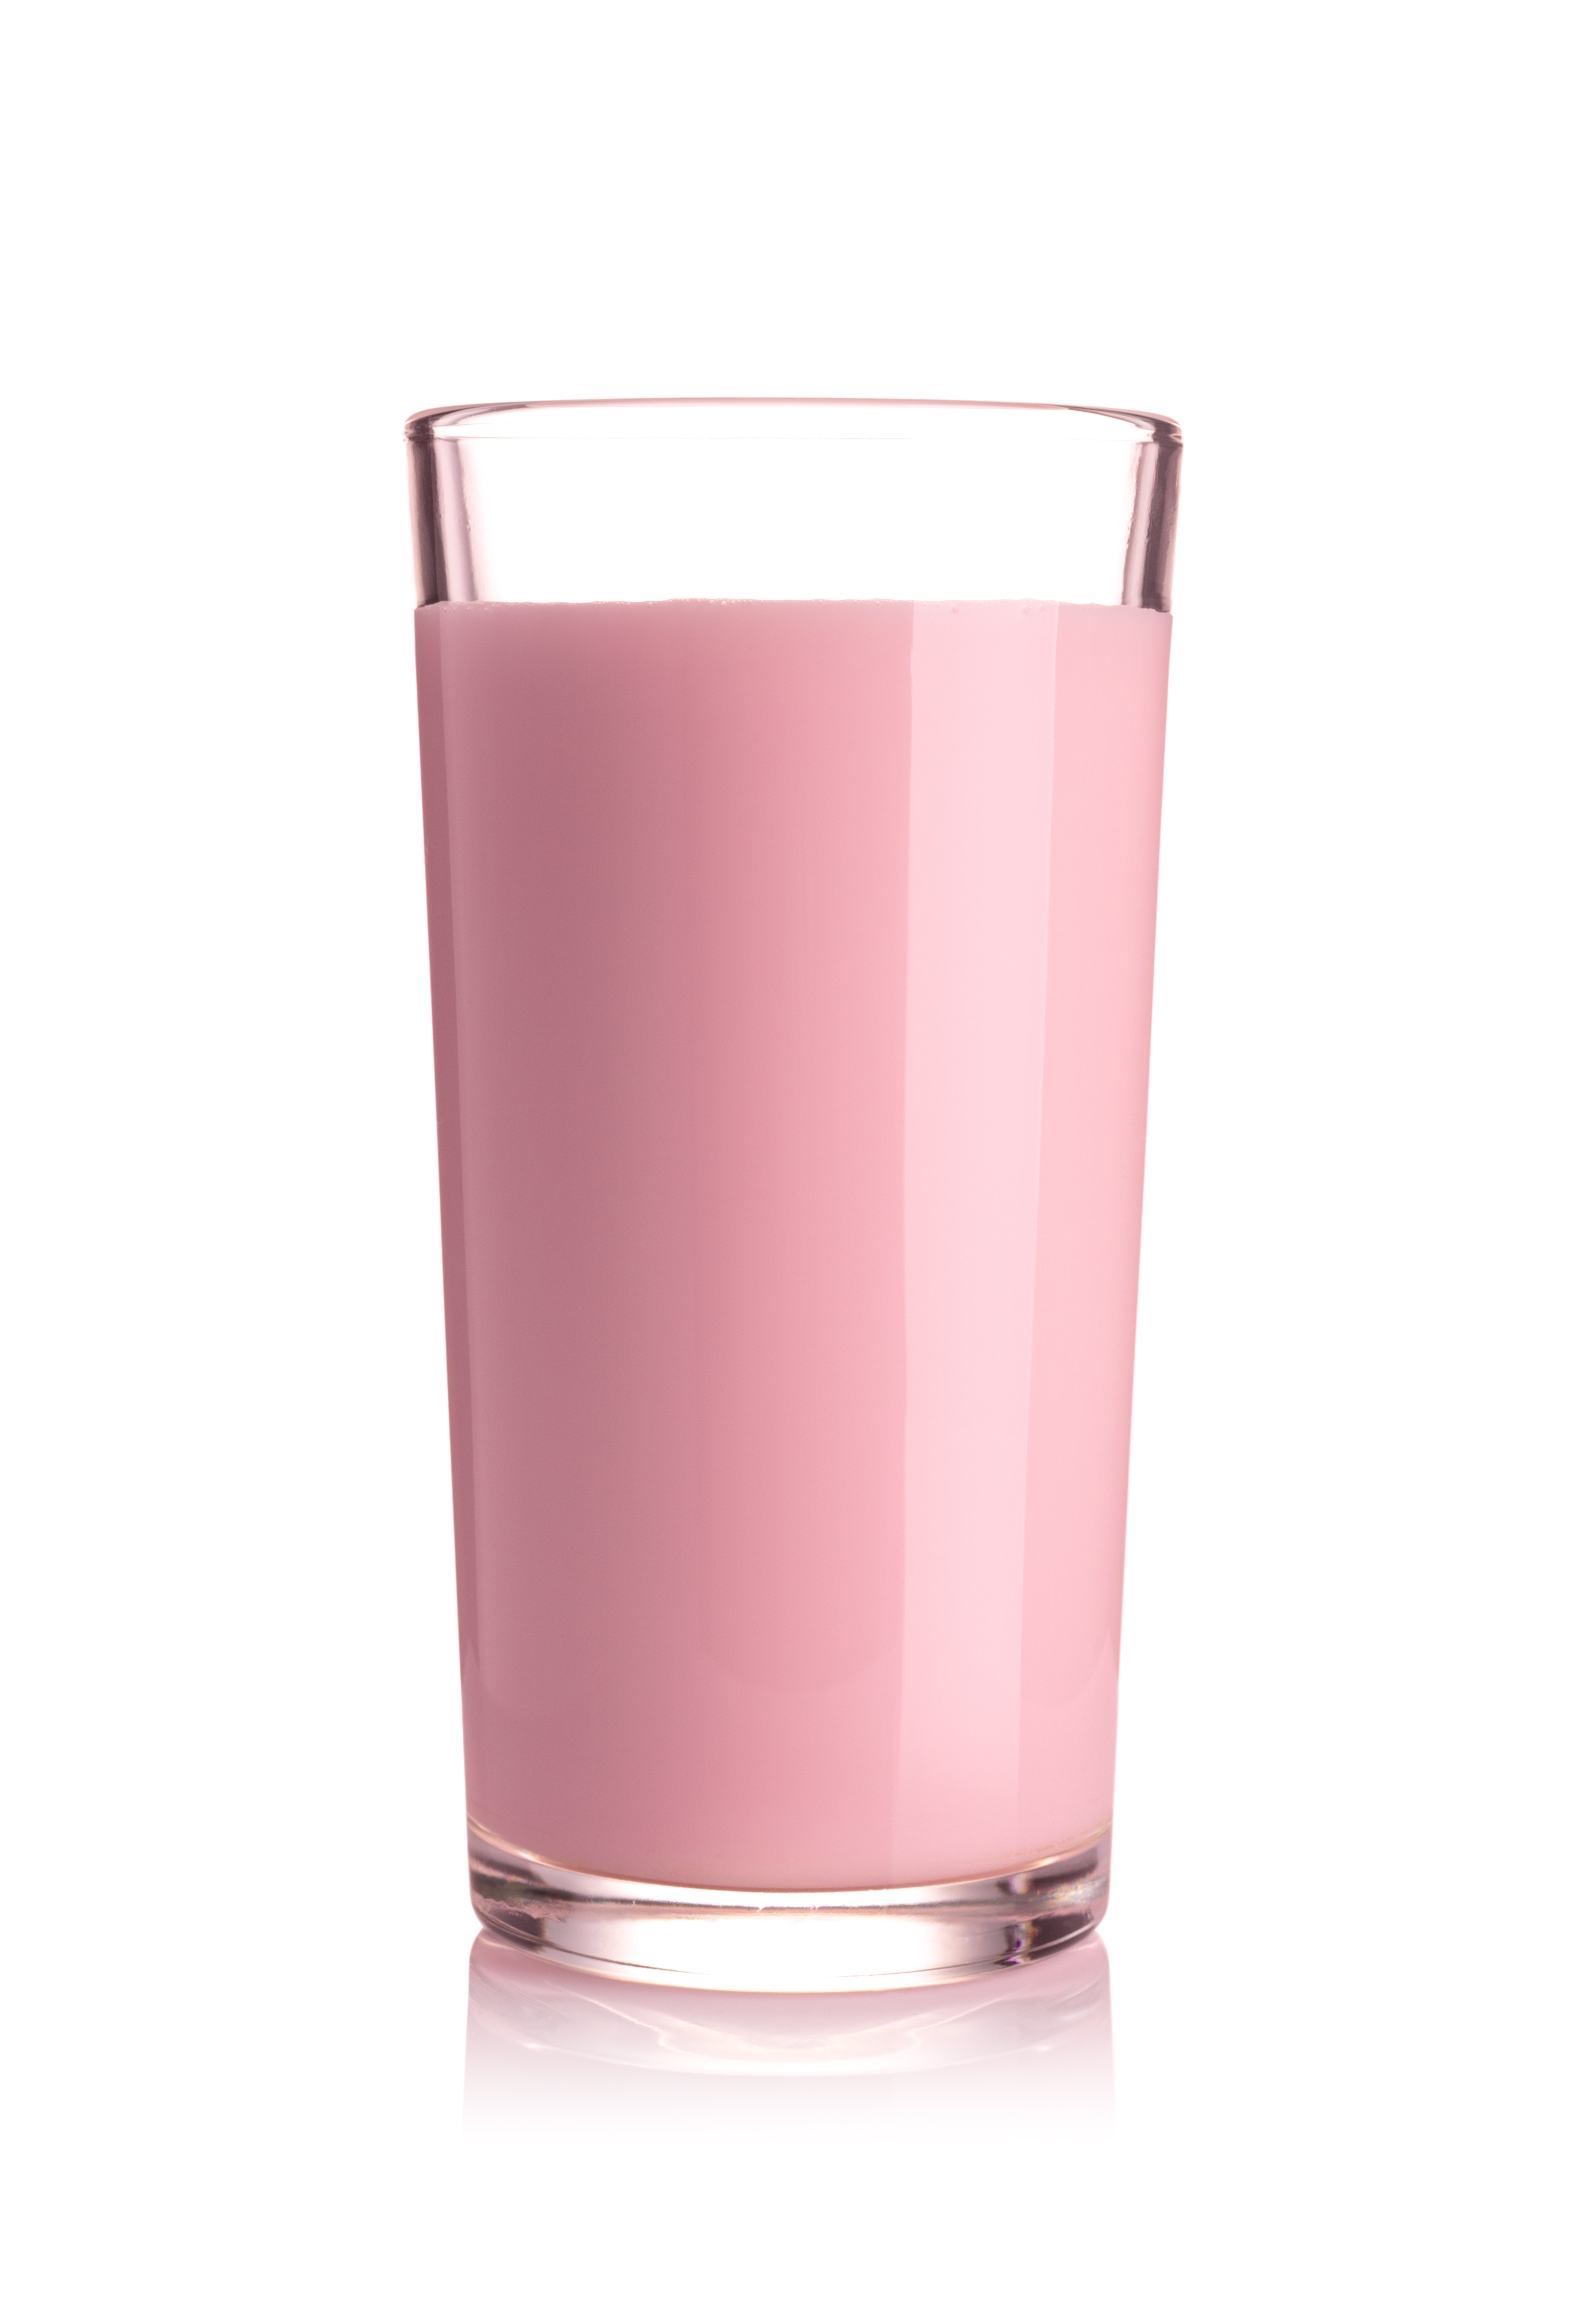 A glass of strawberry milk | Source: Shutterstock